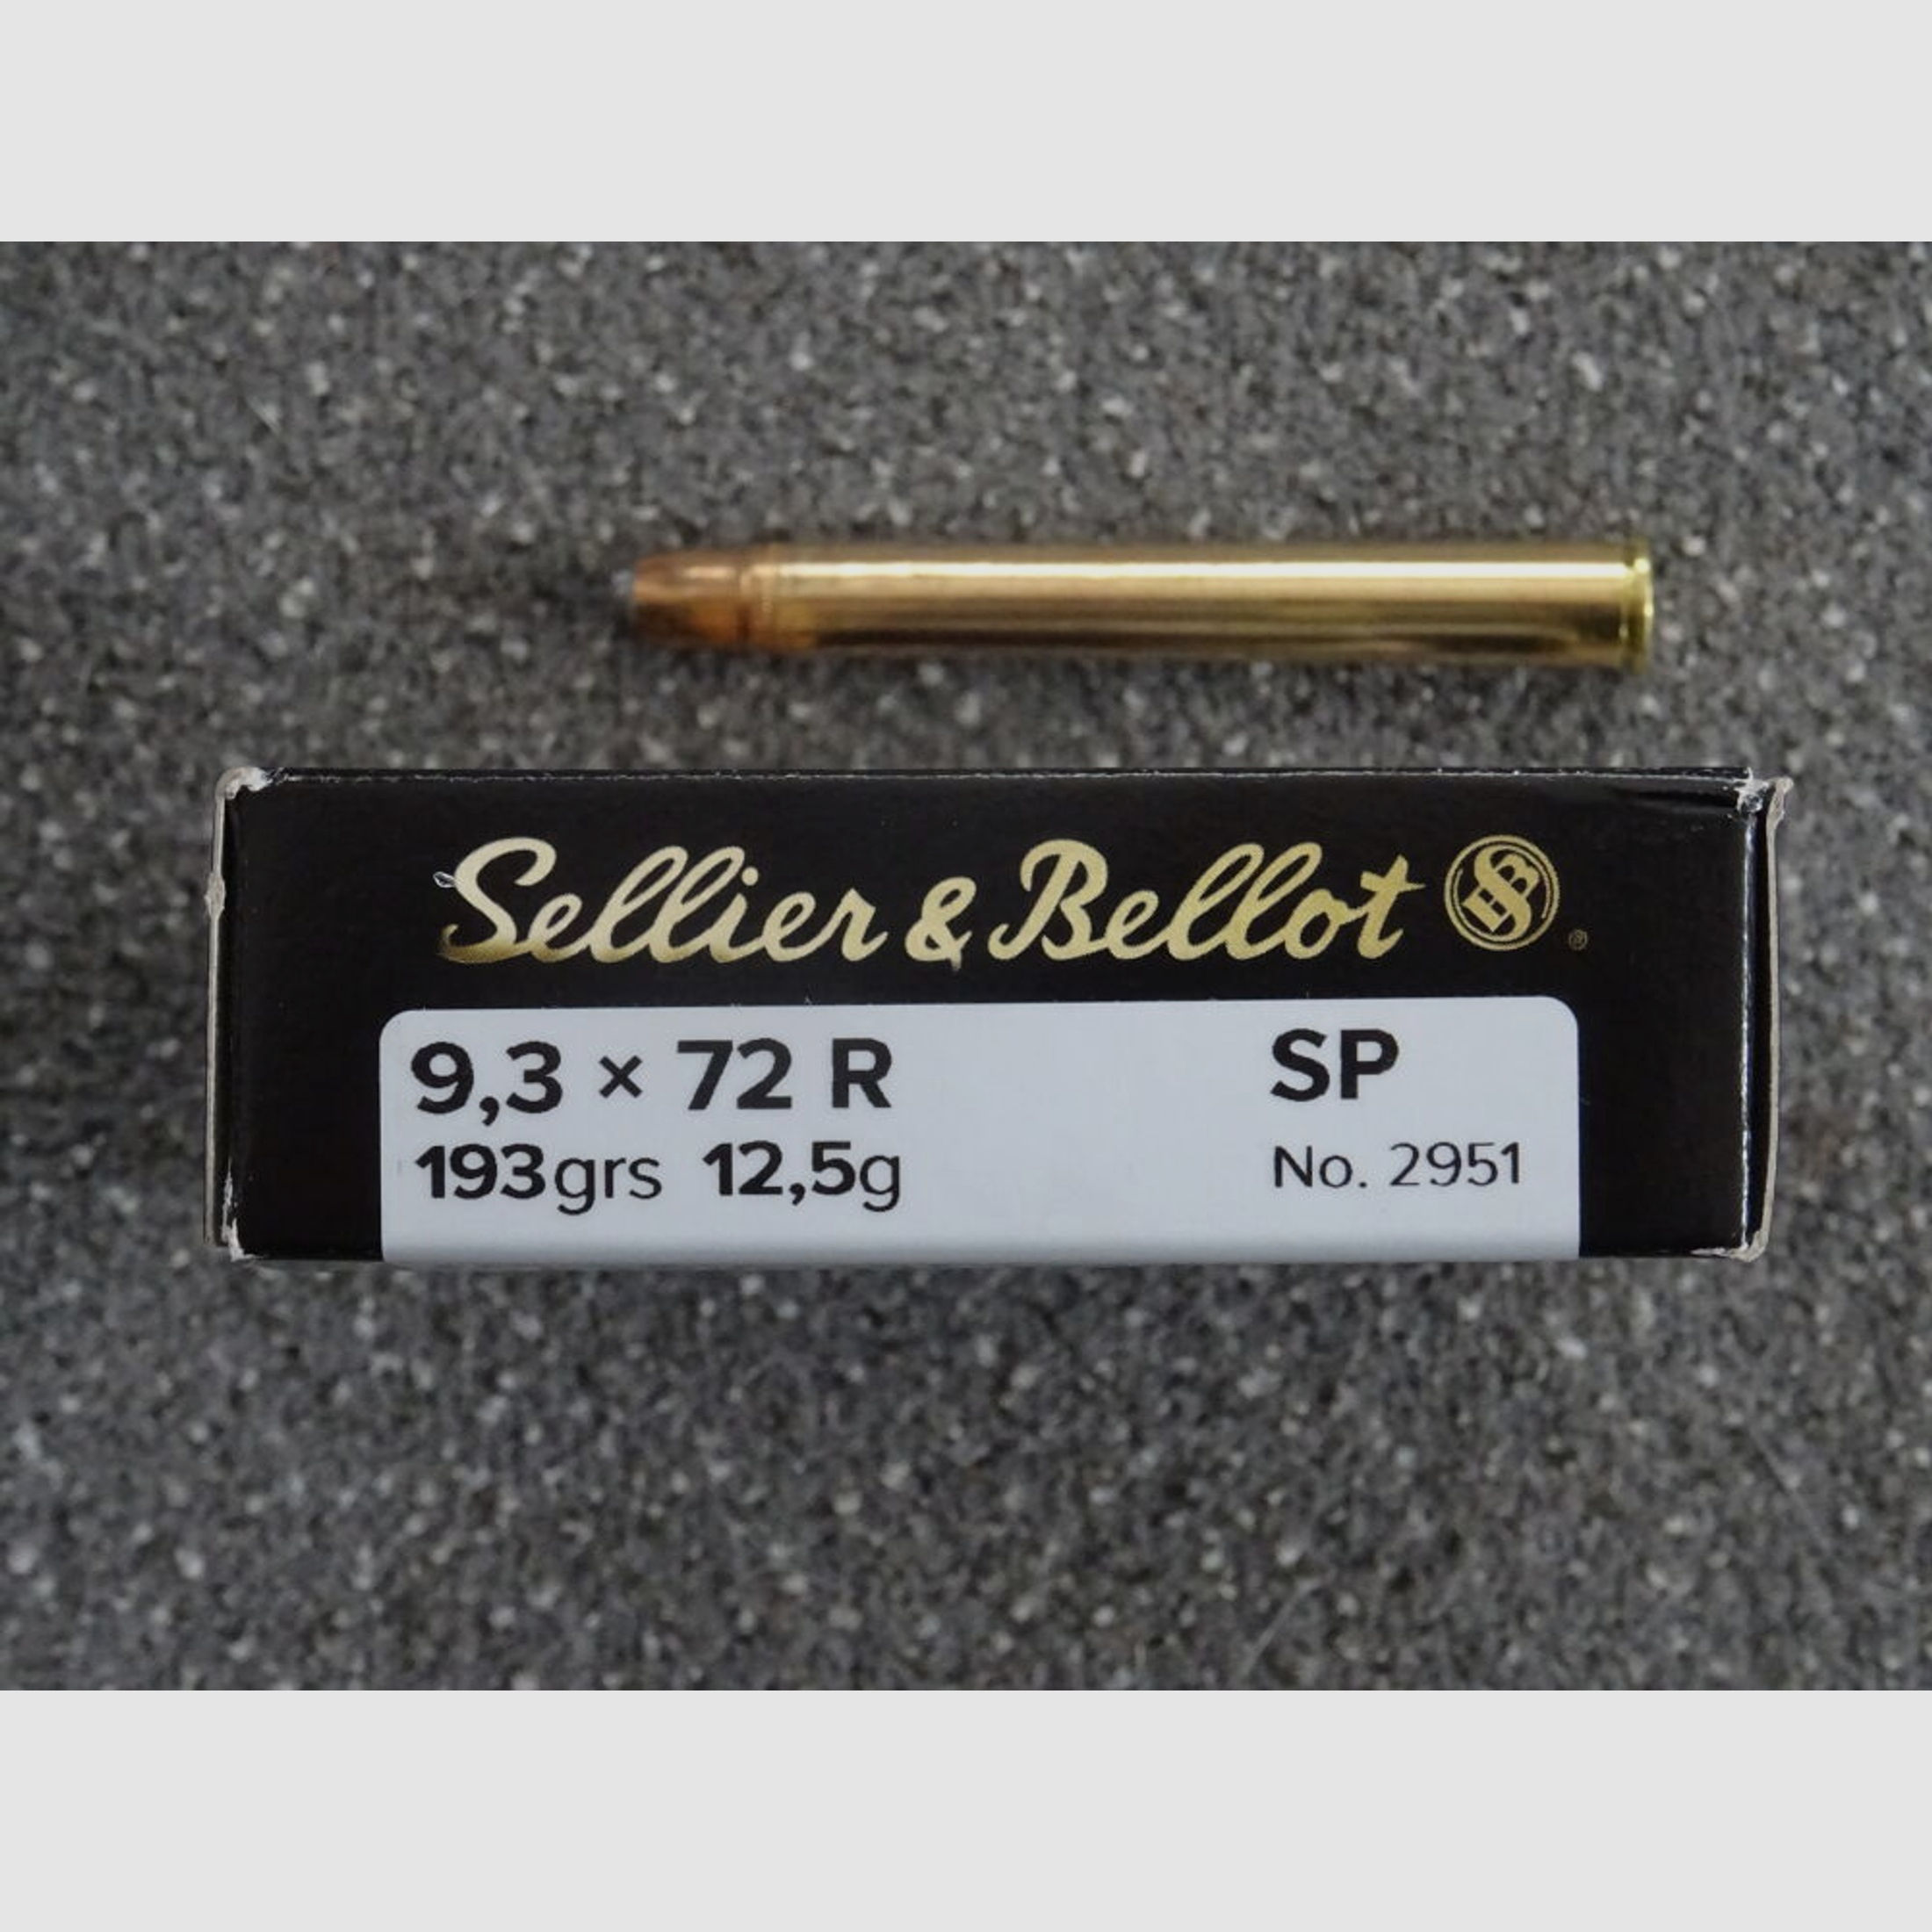 S&B SELLIER & BELLOT	 9,3x72R 12,5g Teilmantel